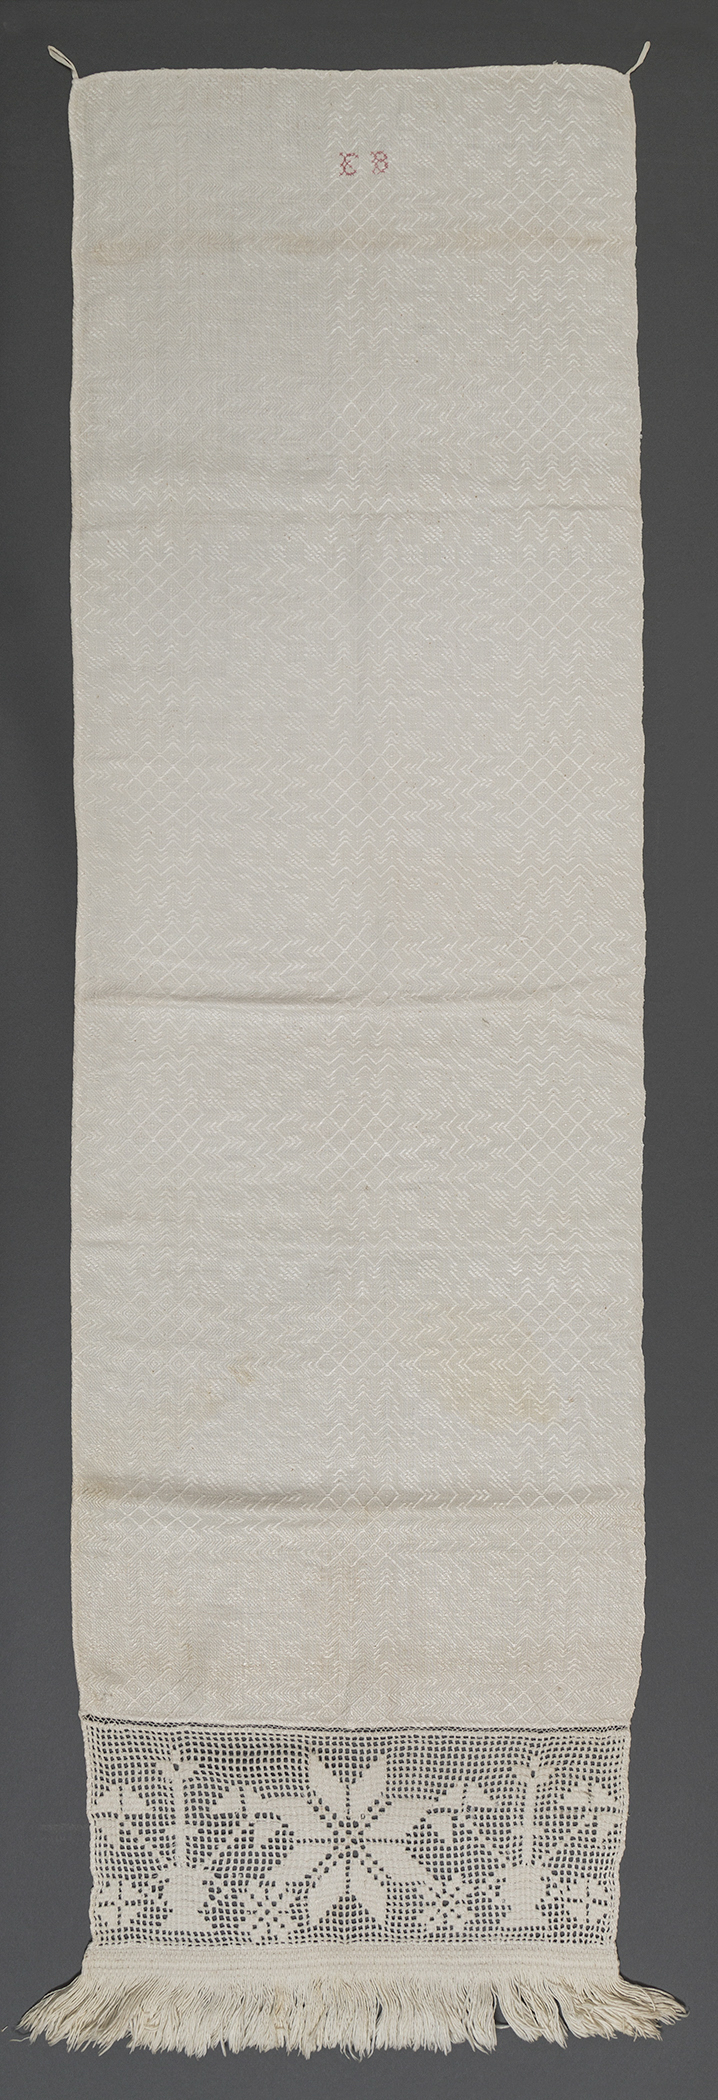 Textiles (Needlework) - Towel